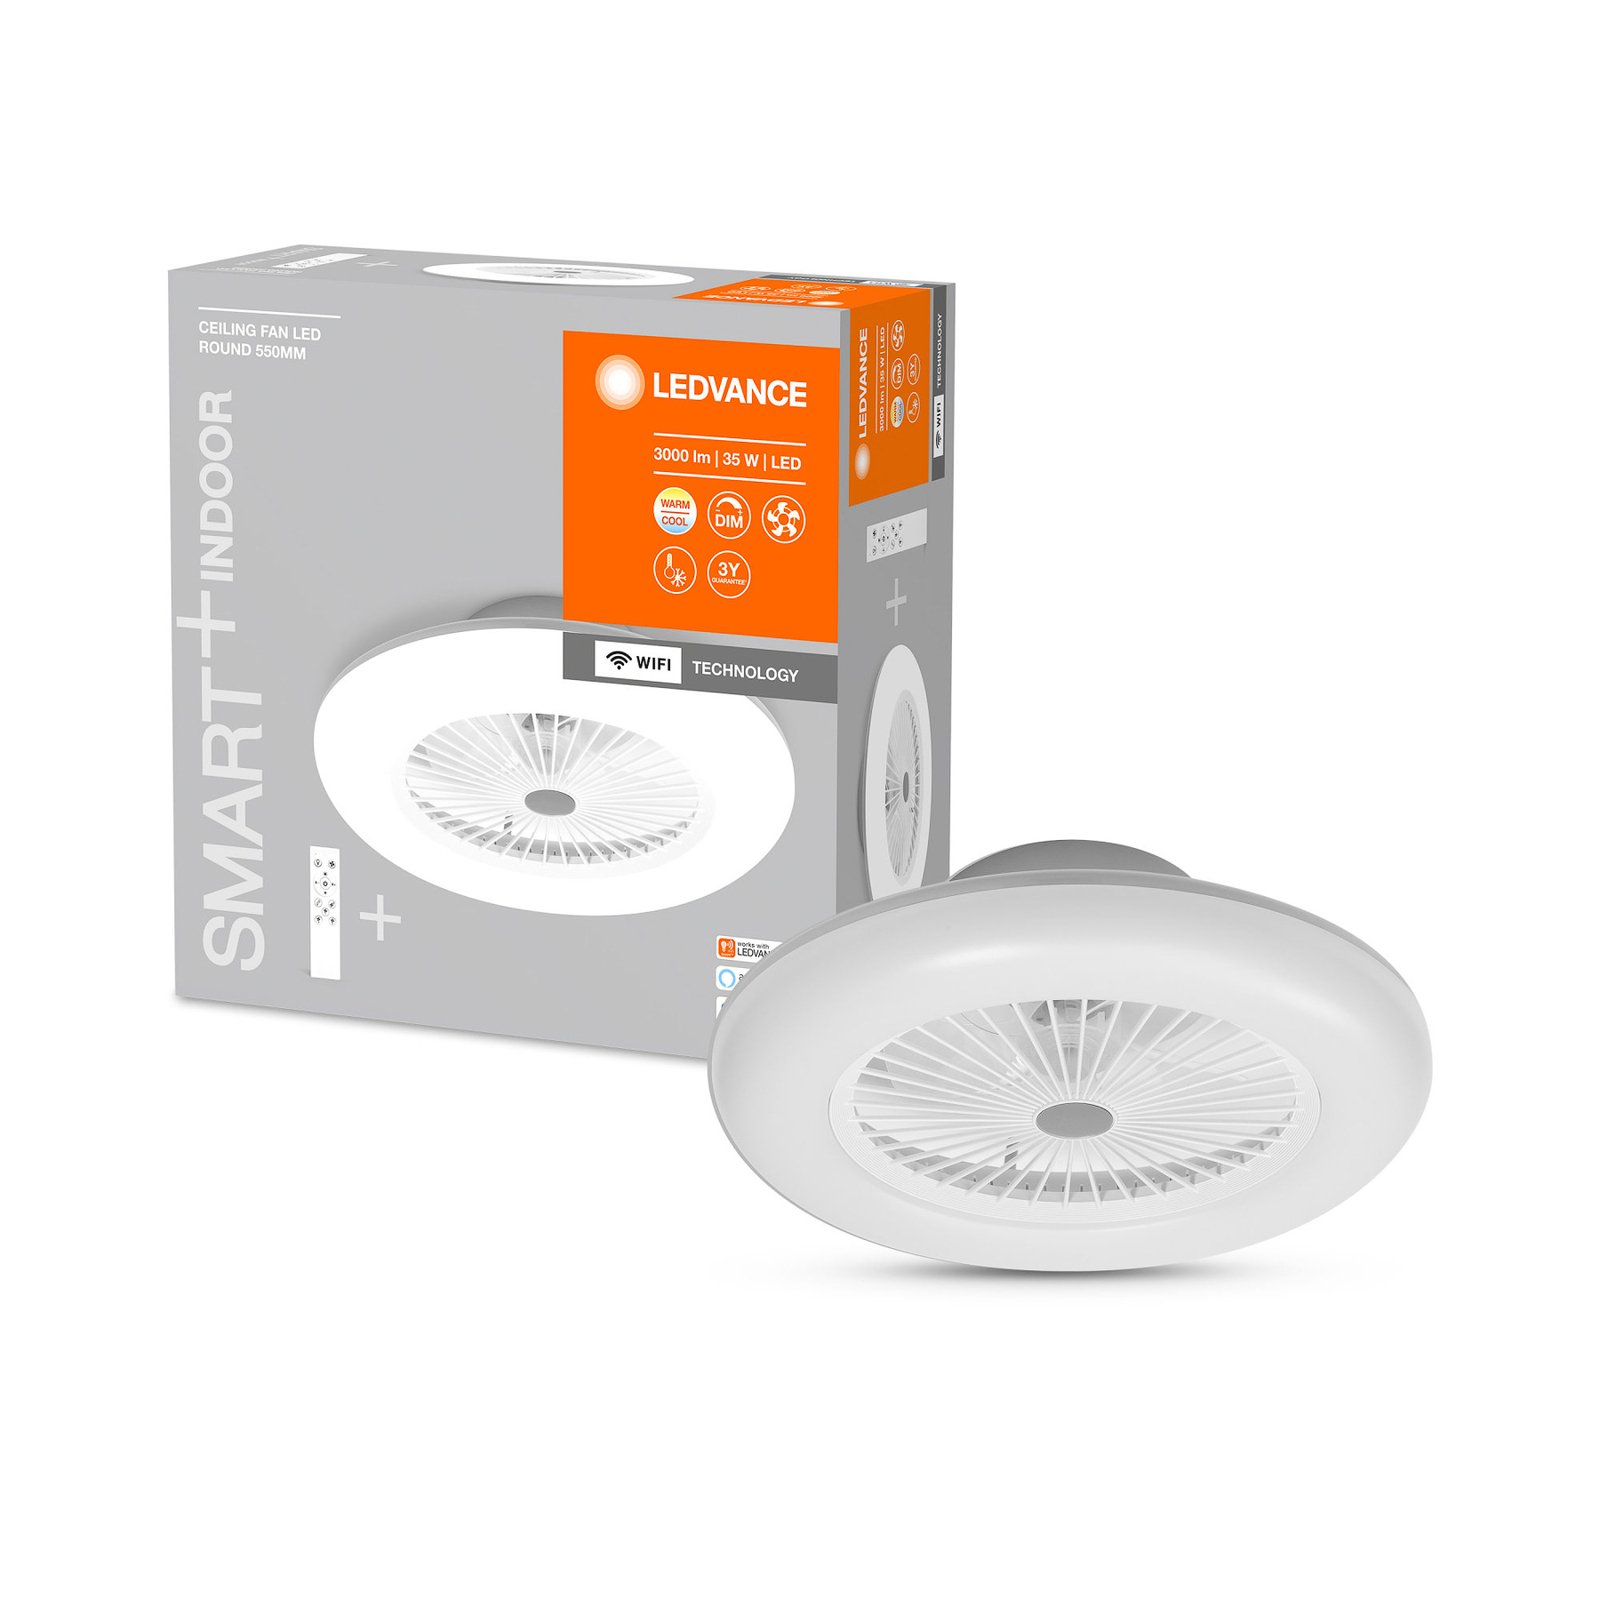 LEDVANCE SMART+ WiFi Round LED ceiling fan